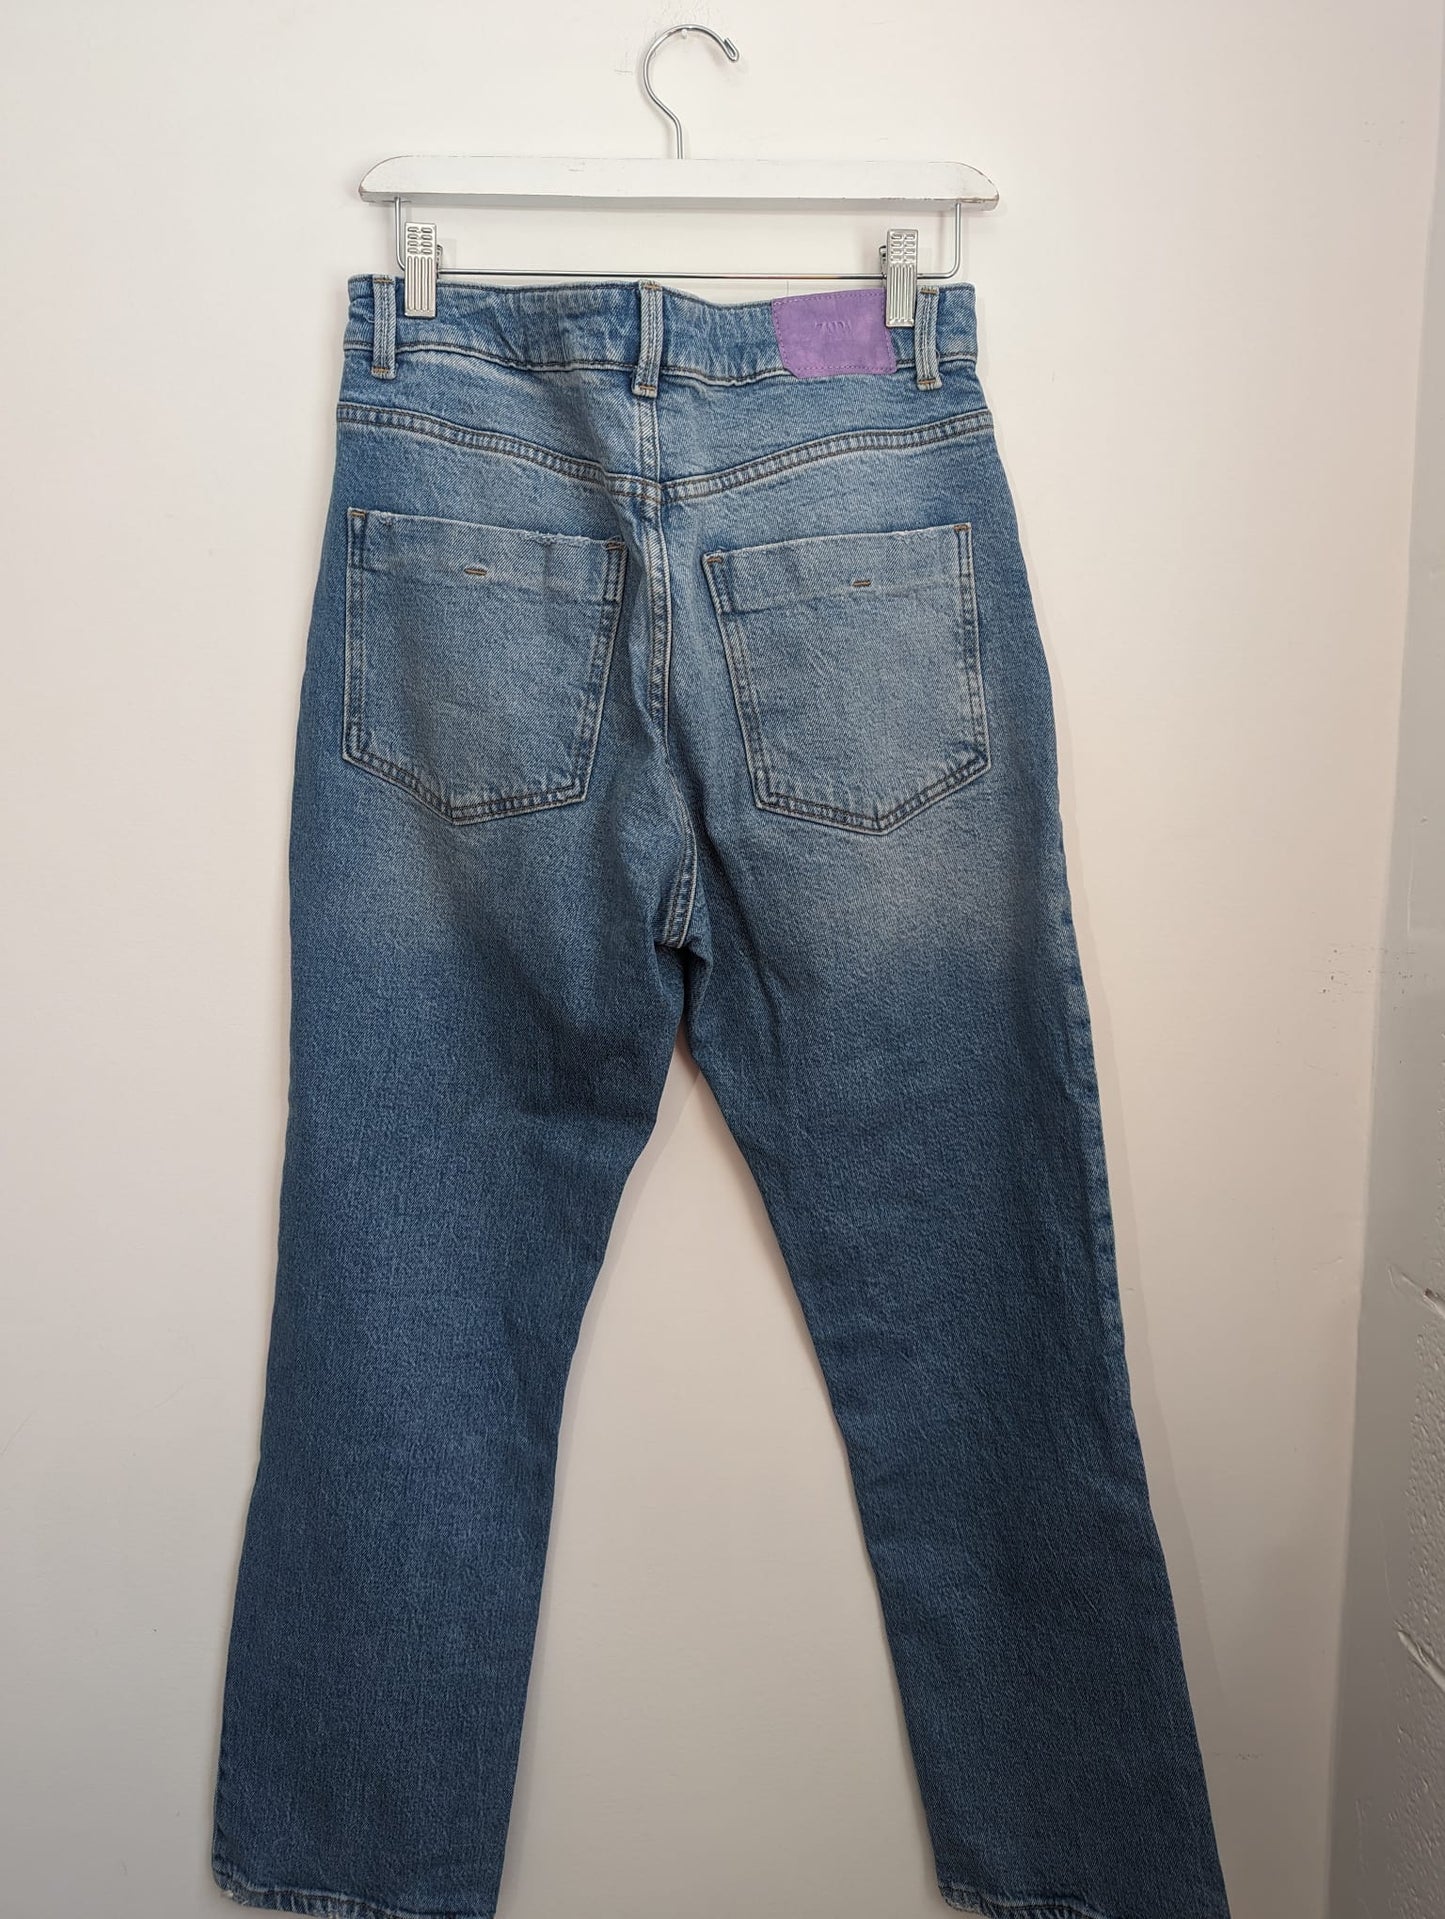 Zara Light Wash Straight Jeans - Size 10